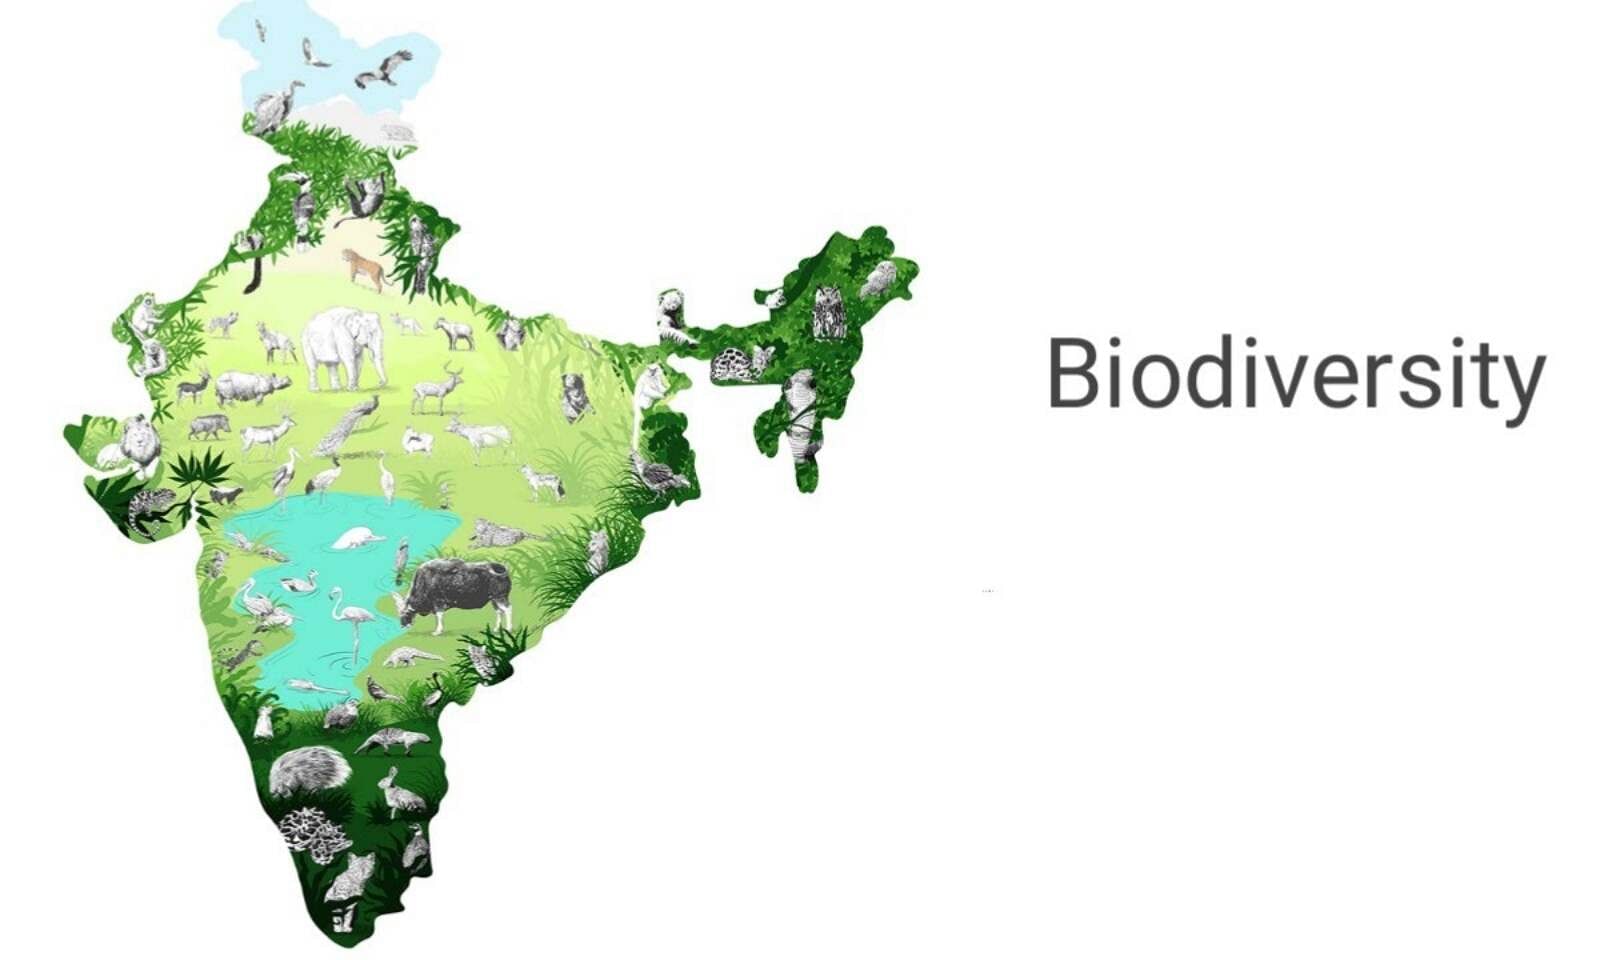 Biodiversity in India